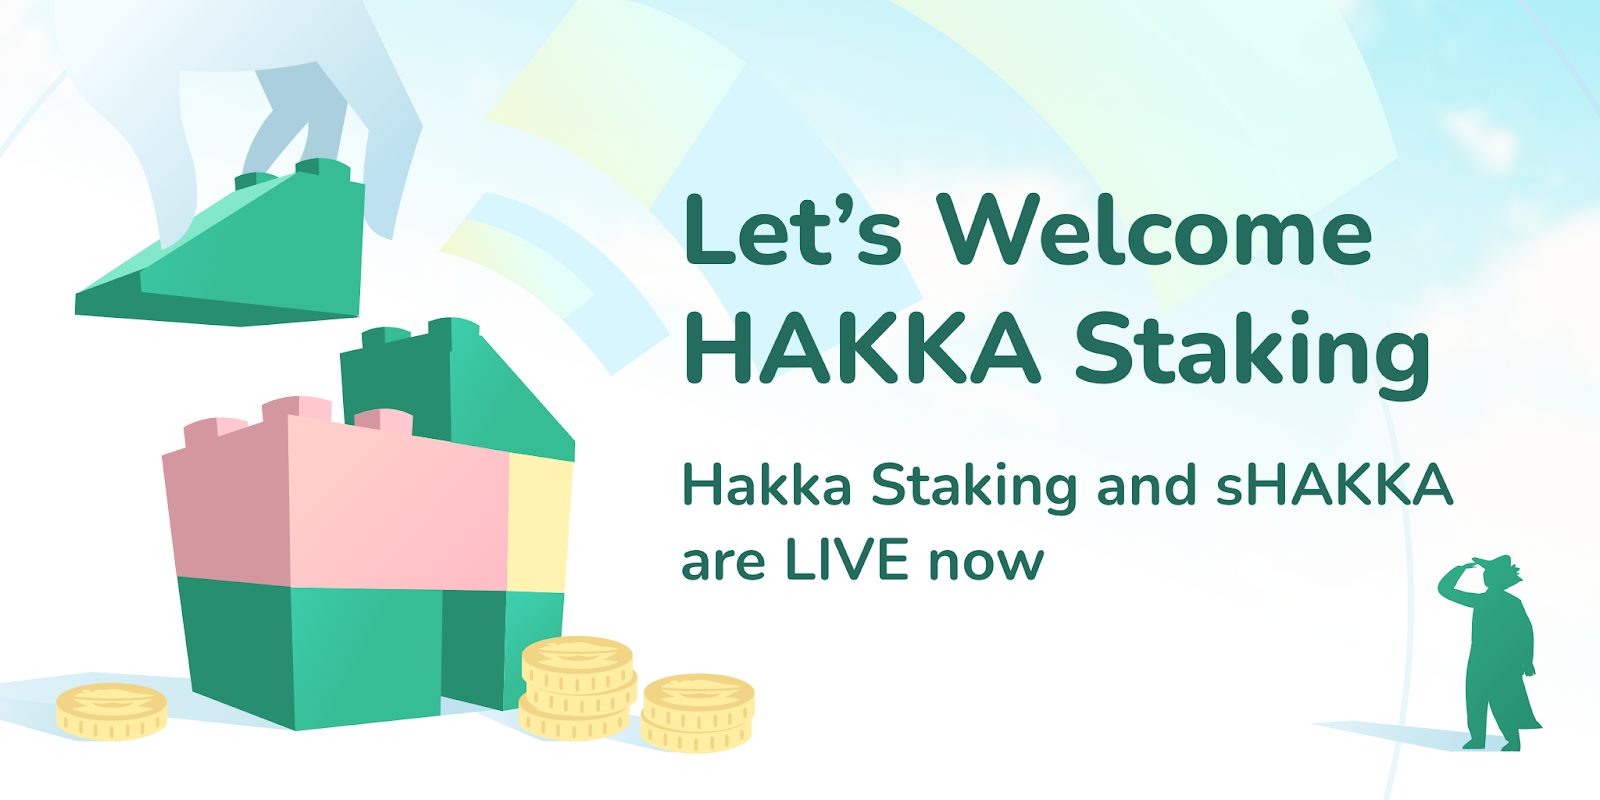 Hakka Staking & sHAKKA are LIVE now